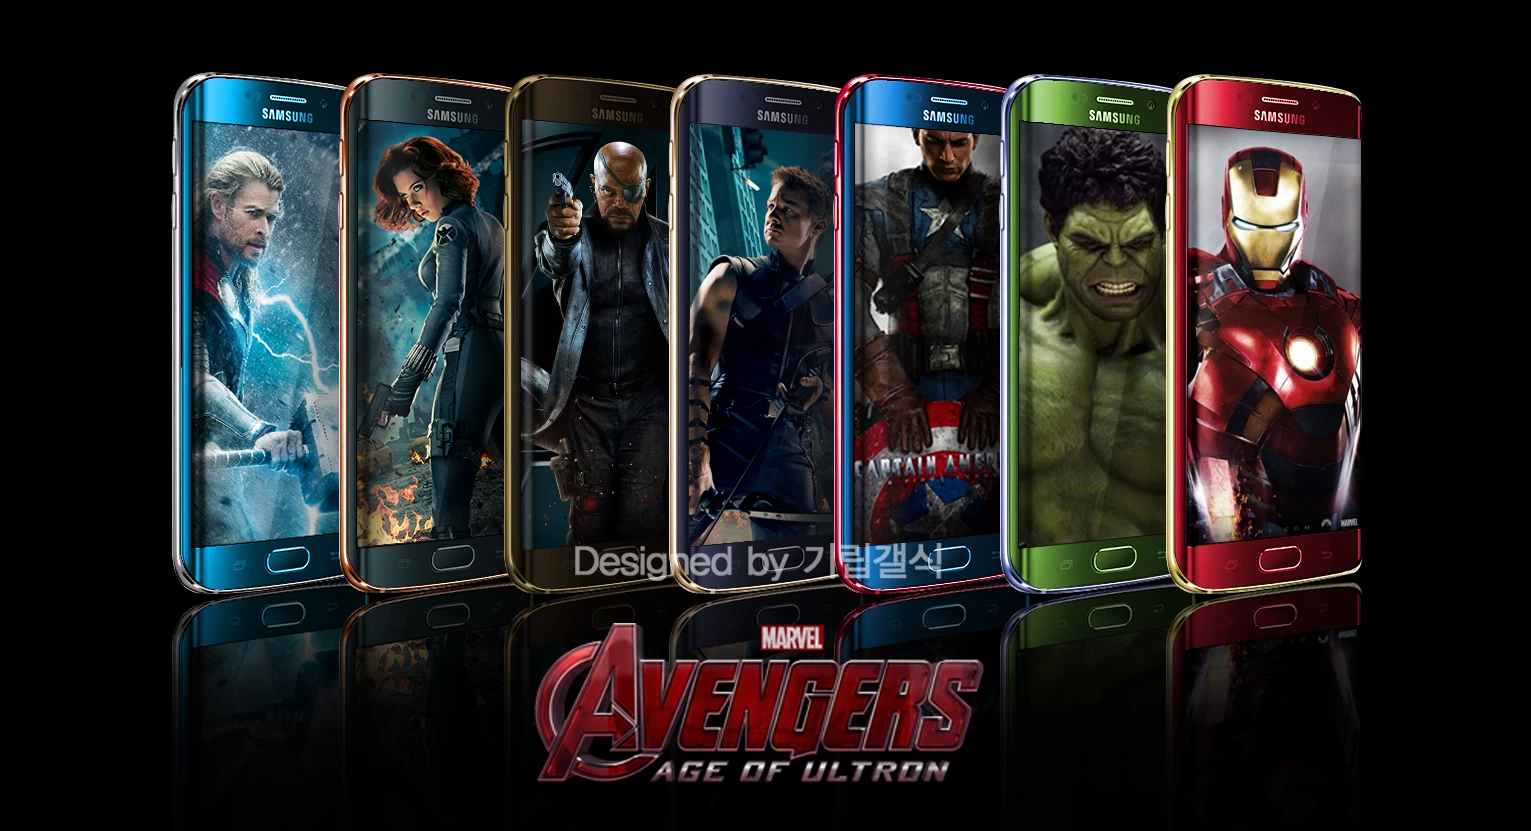 Galaxy S6 Avengers Edition Lead | galaxy s6 | มาดูคอนเซปท์ Galaxy S6 Avengers Edition กัน เท่ไม่เบาเลยทีเดียว